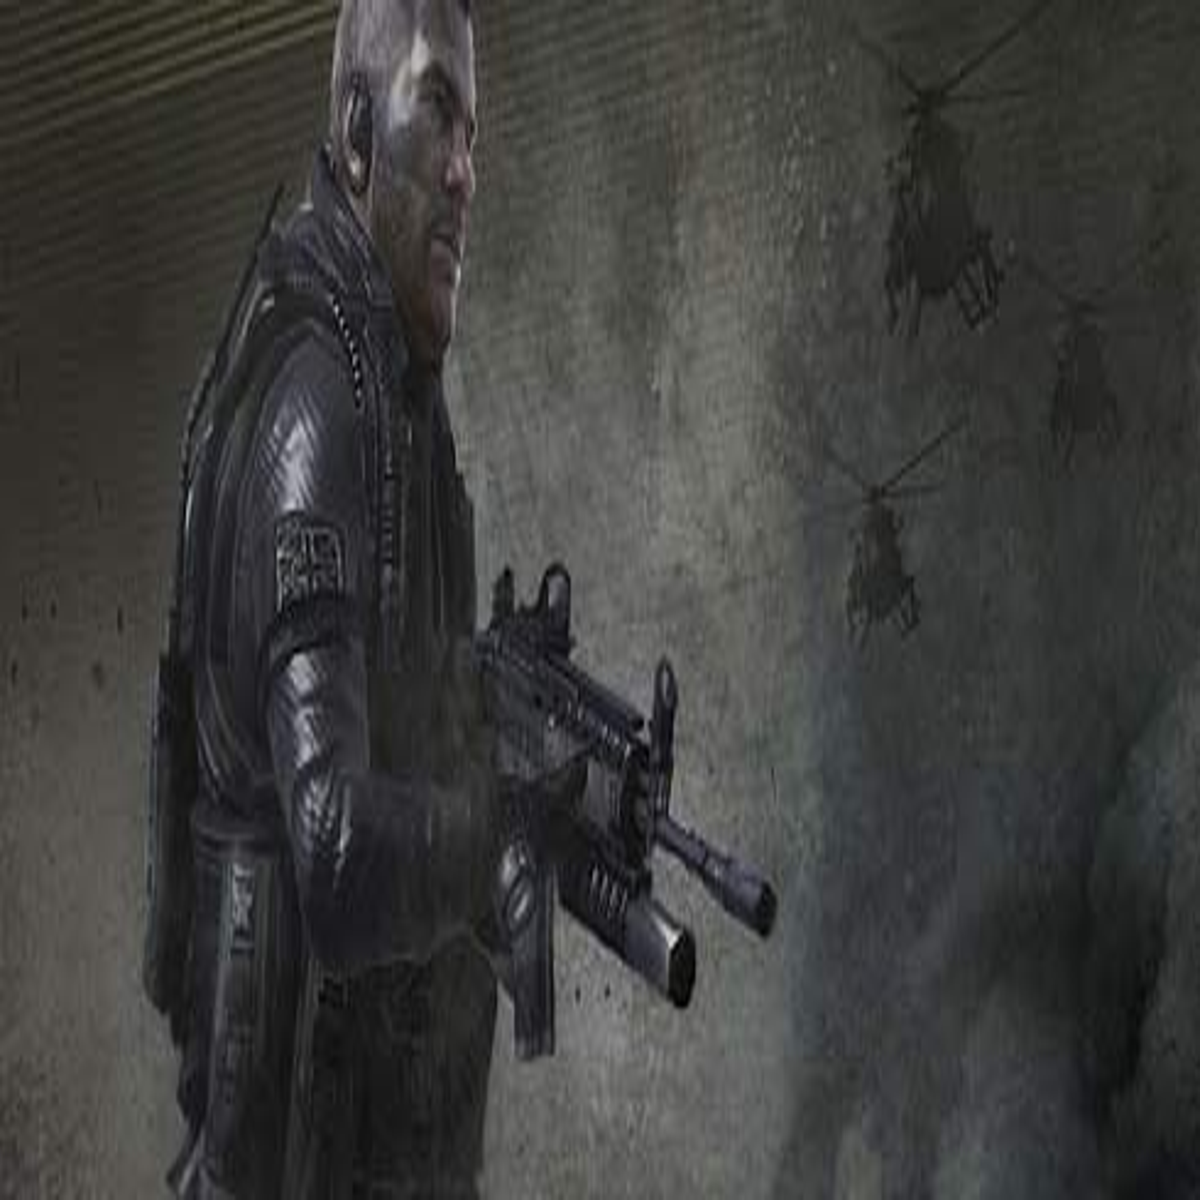 Classic MW2 2009 gun sounds return in Modern Warfare 2 & Warzone 2 Season 3  - Dexerto